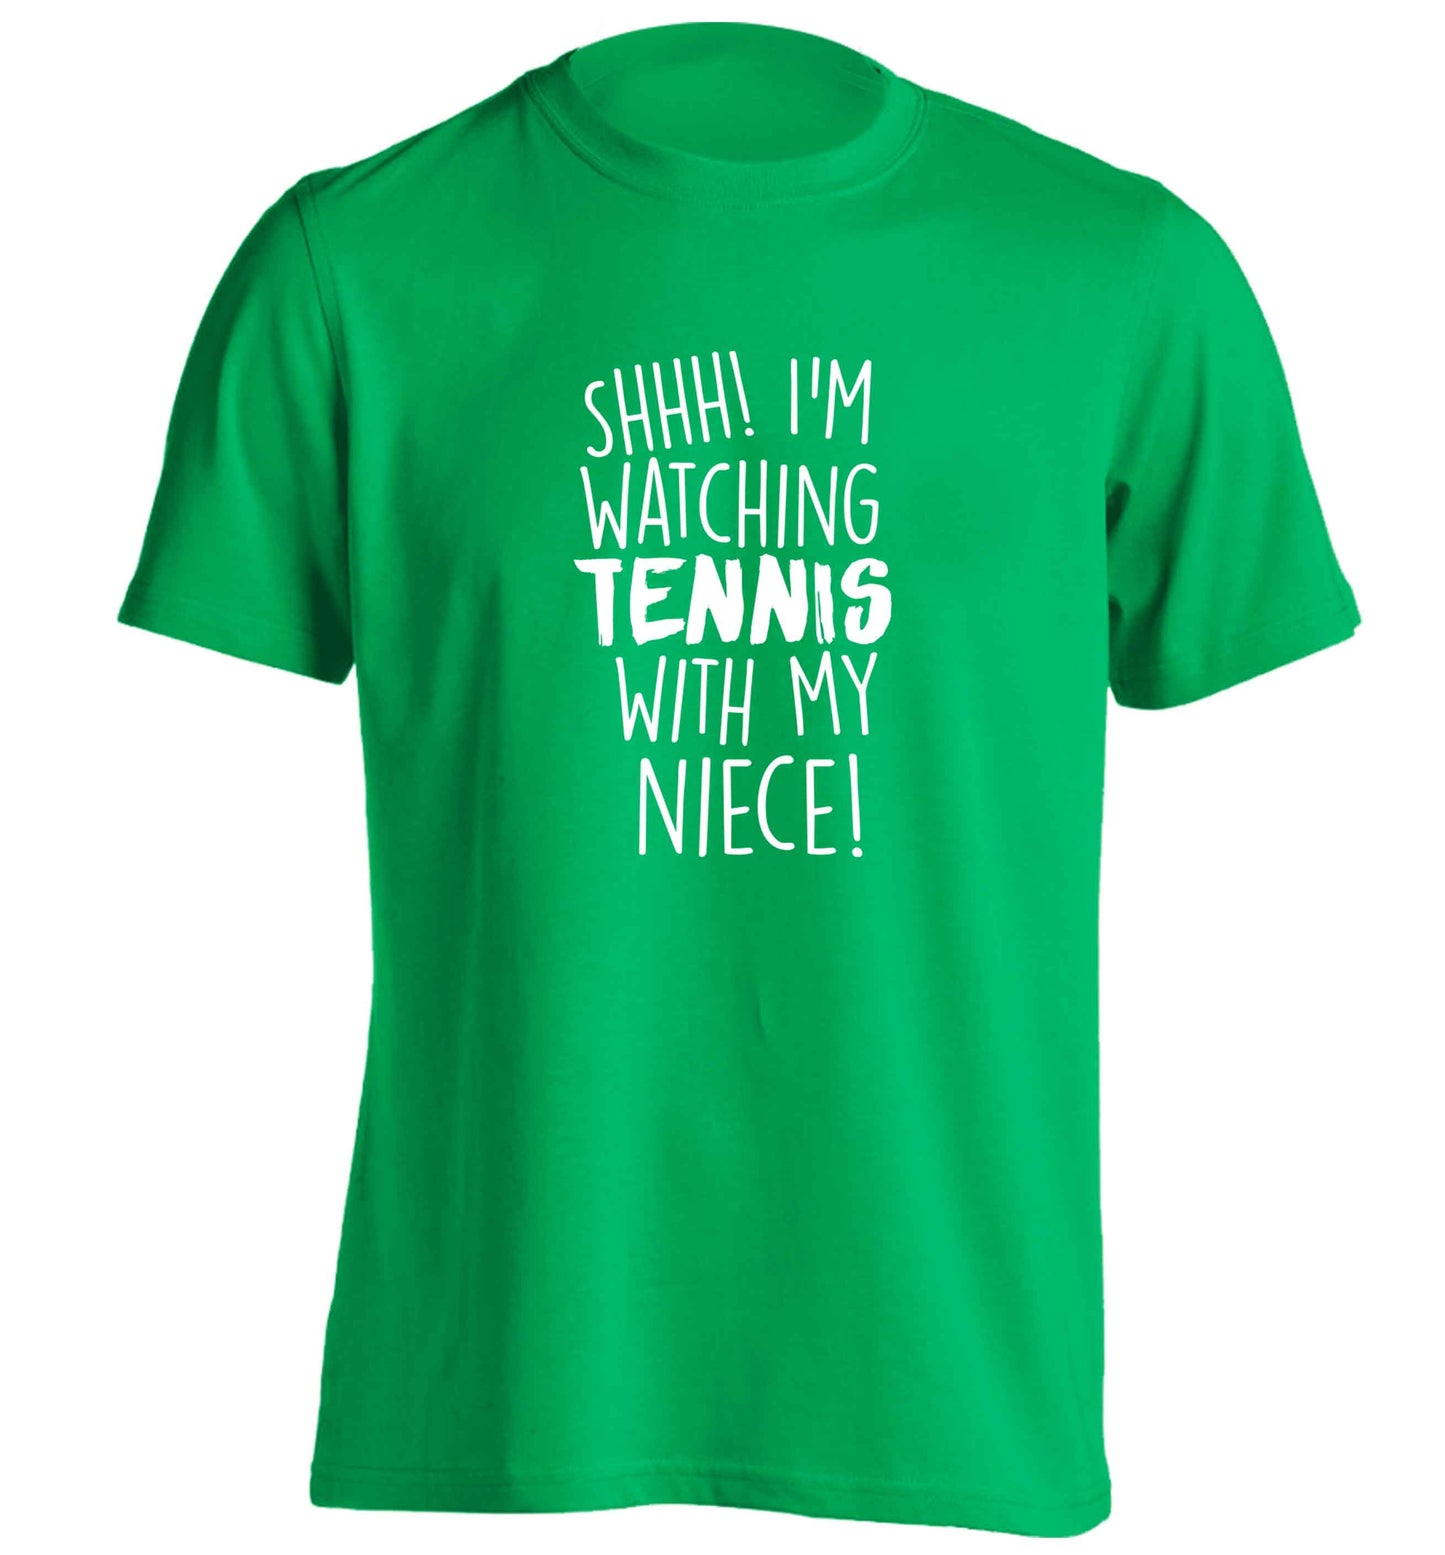 Shh! I'm watching tennis with my niece! adults unisex green Tshirt 2XL